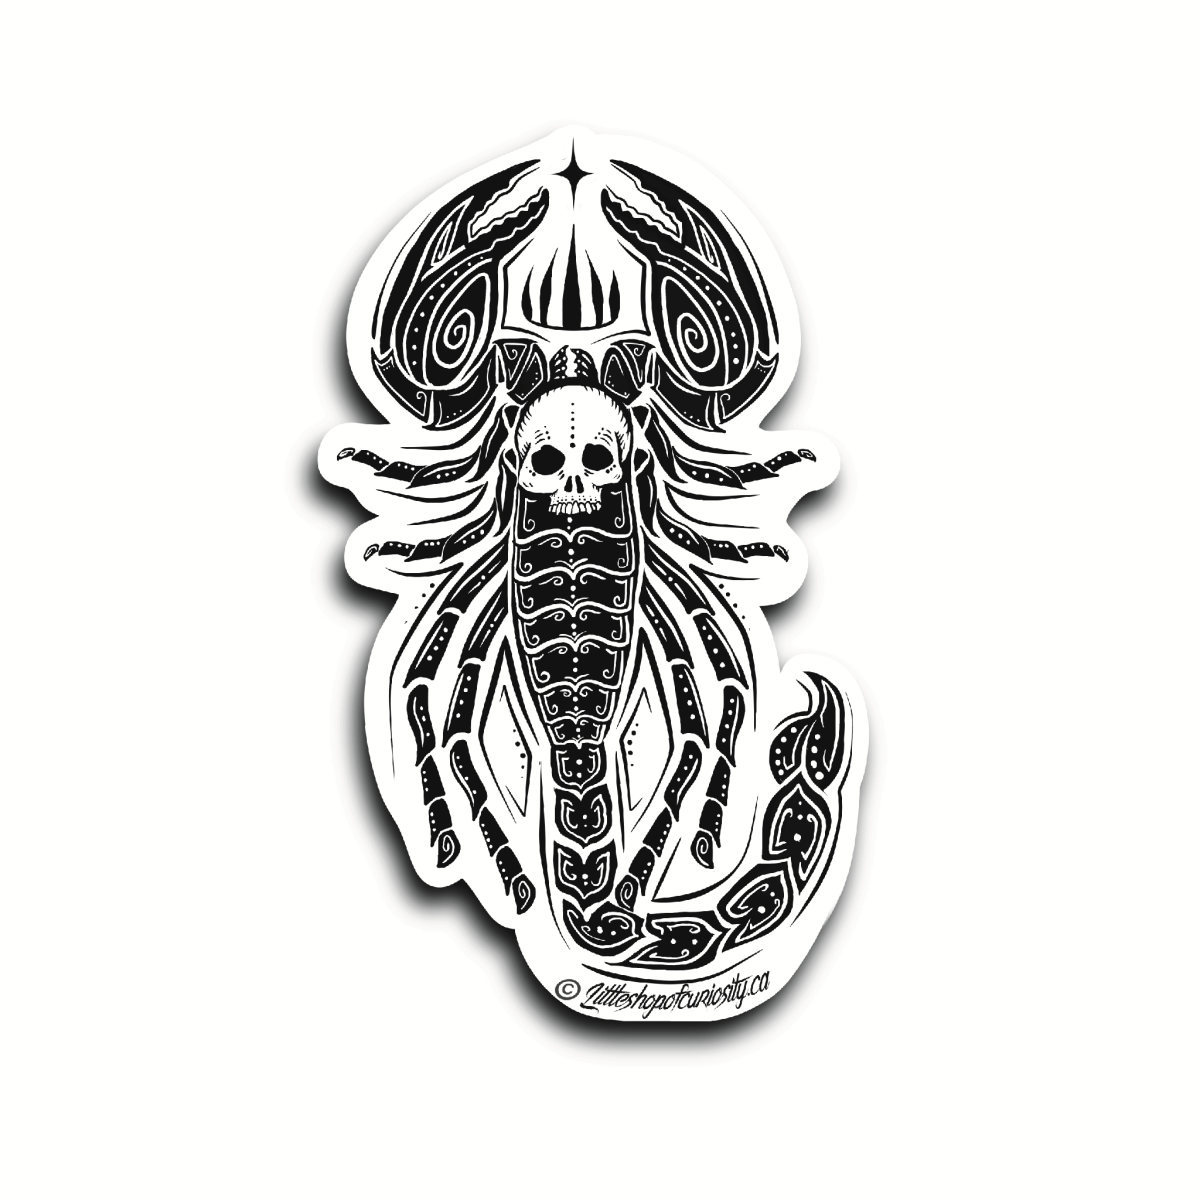 Prince of Darkness Scorpion Sticker - Black & White Sticker - Little Shop of Curiosity